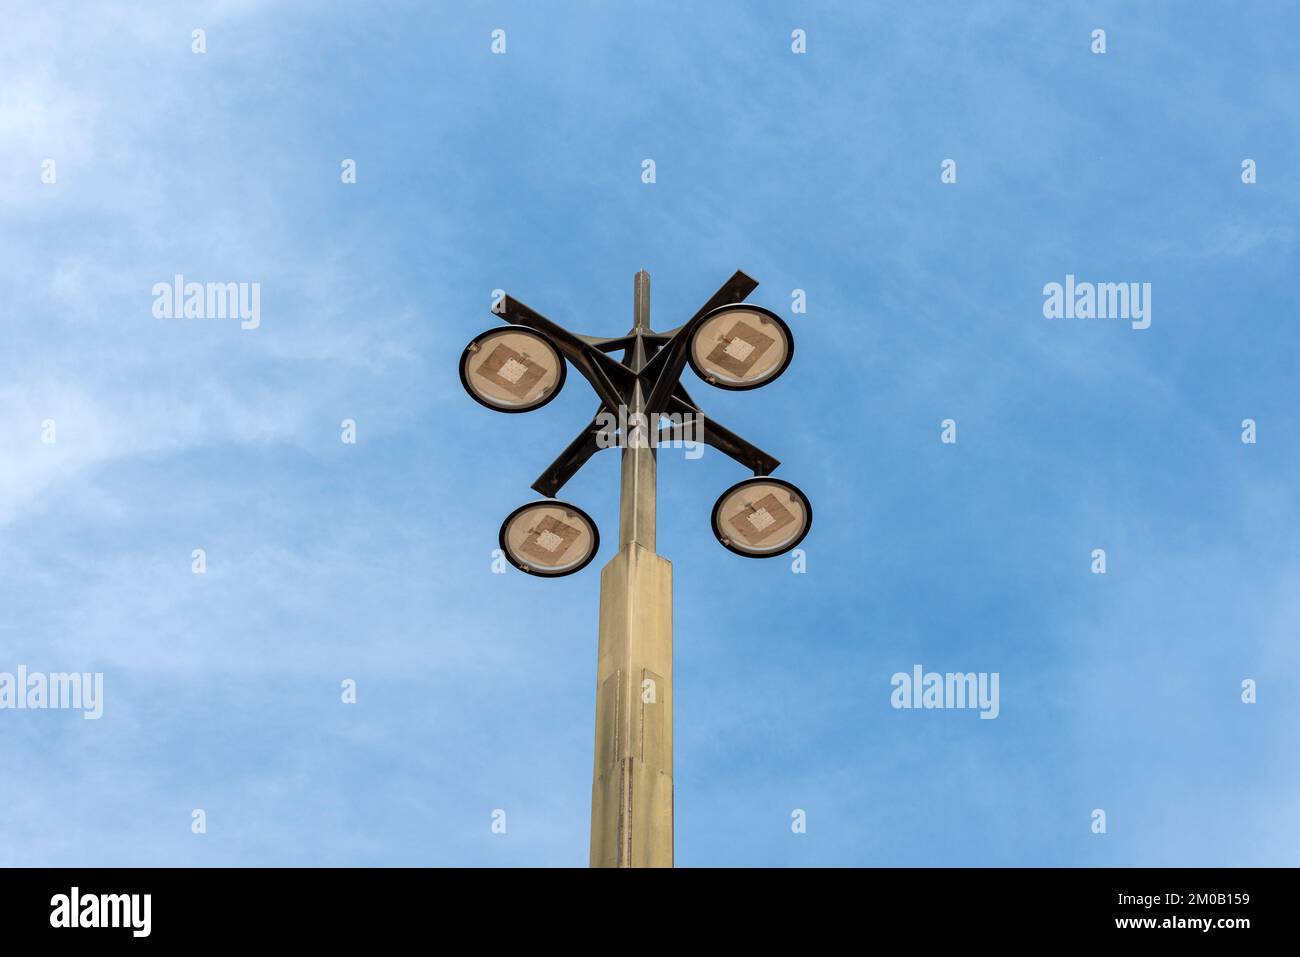 Modern LED eco street light against a blue sky background Stock Photo